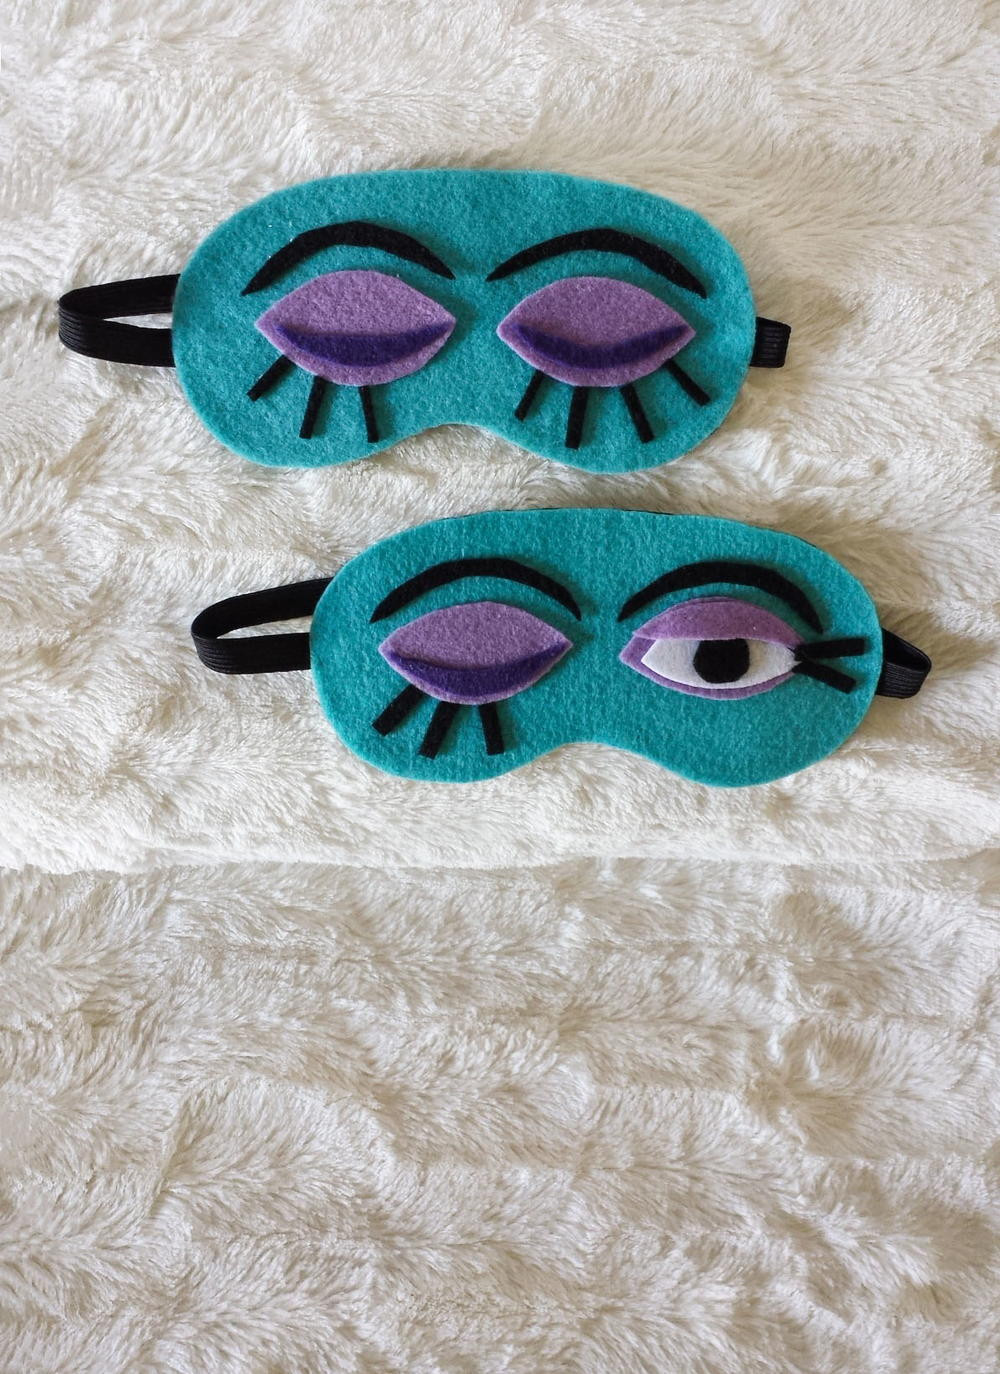 Best ideas about DIY Sleep Mask
. Save or Pin Sleep Mask Diy Now.